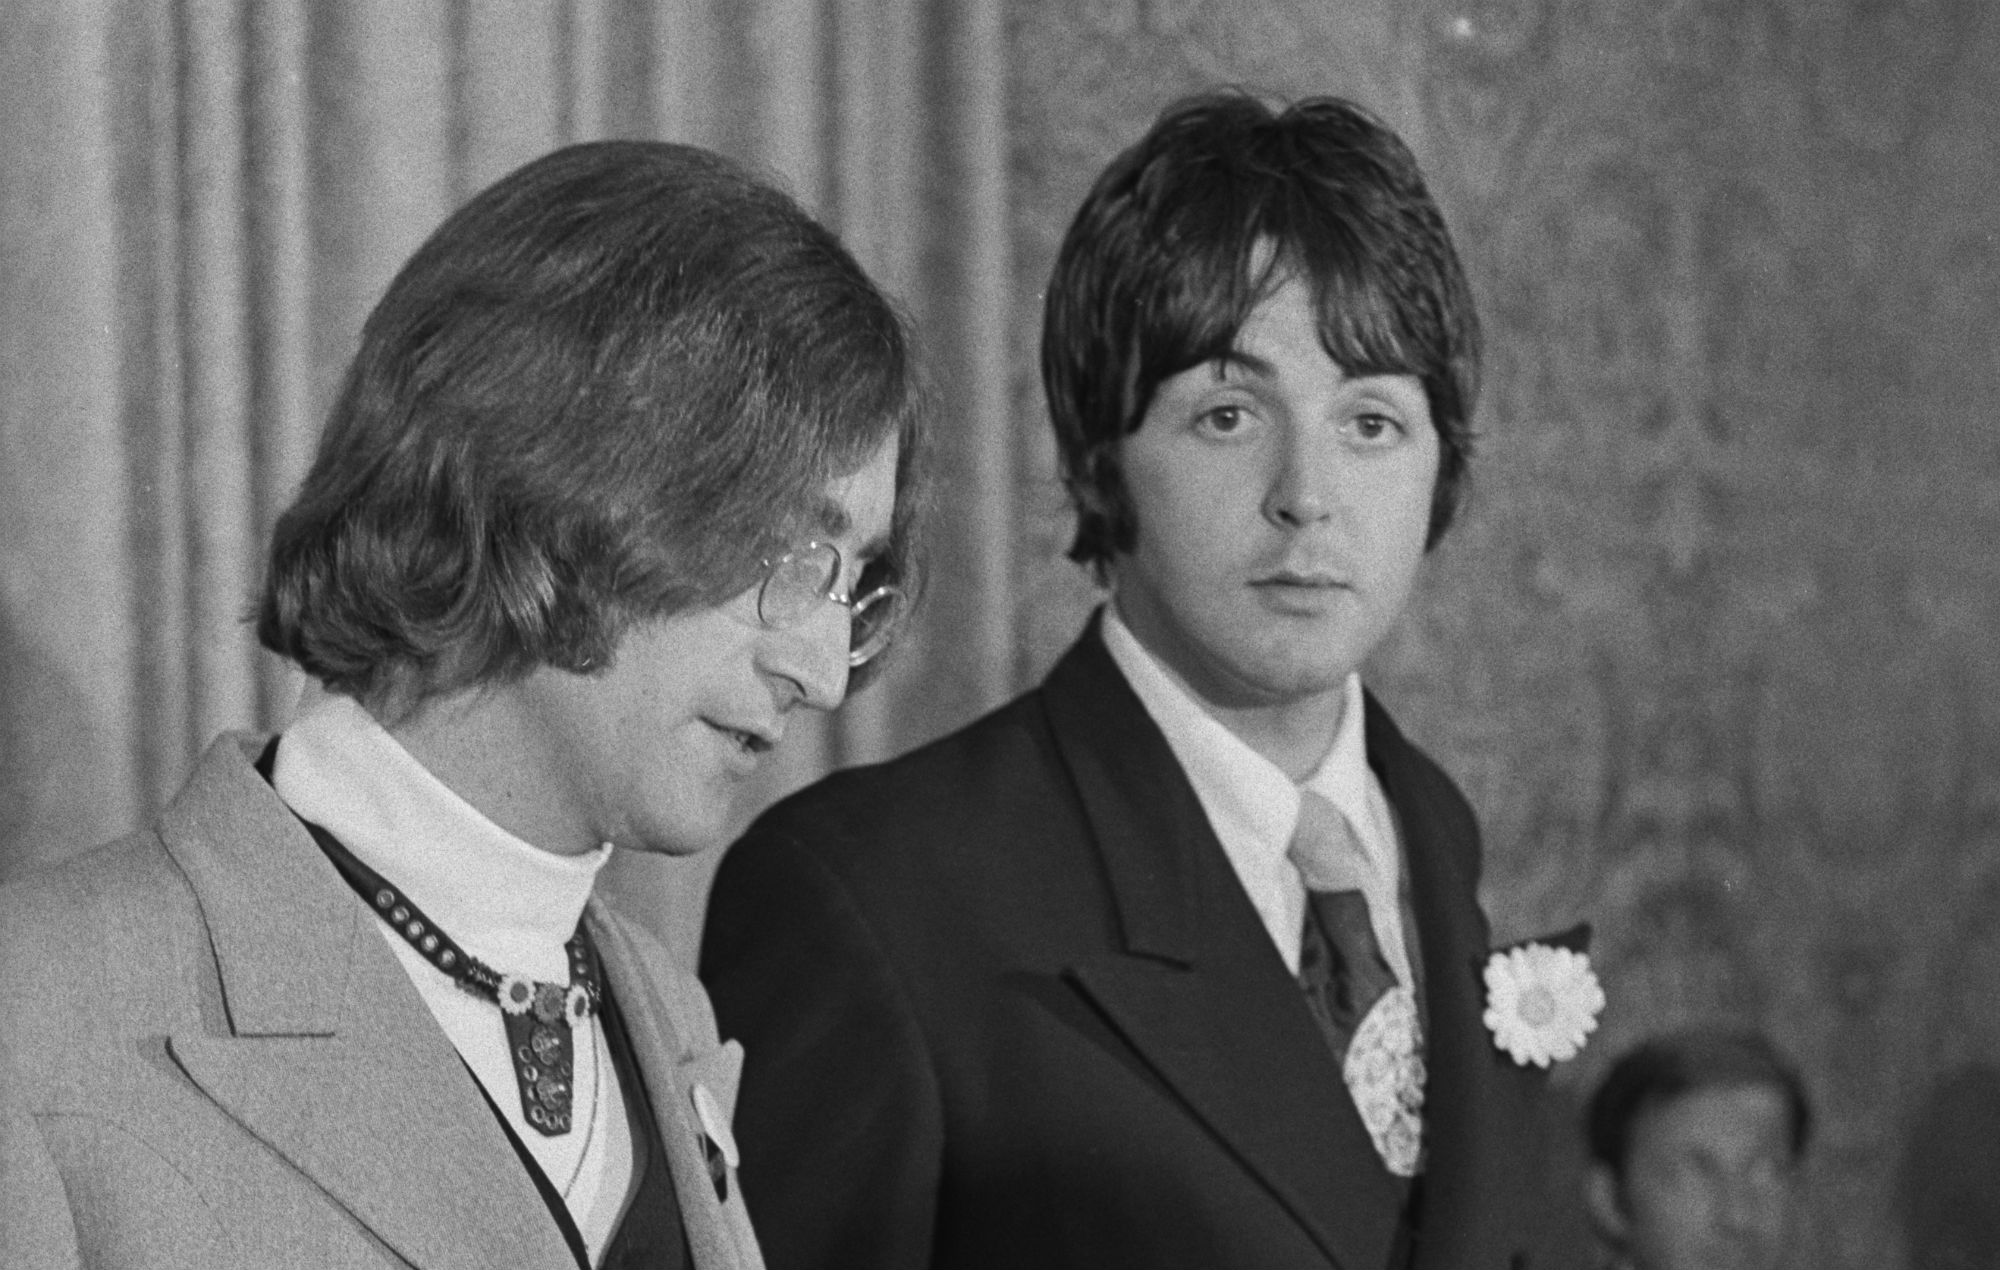 Paul McCartney dice que aún se pregunta si los Beatles se hubieran reunido si John Lennon hubiera vivido